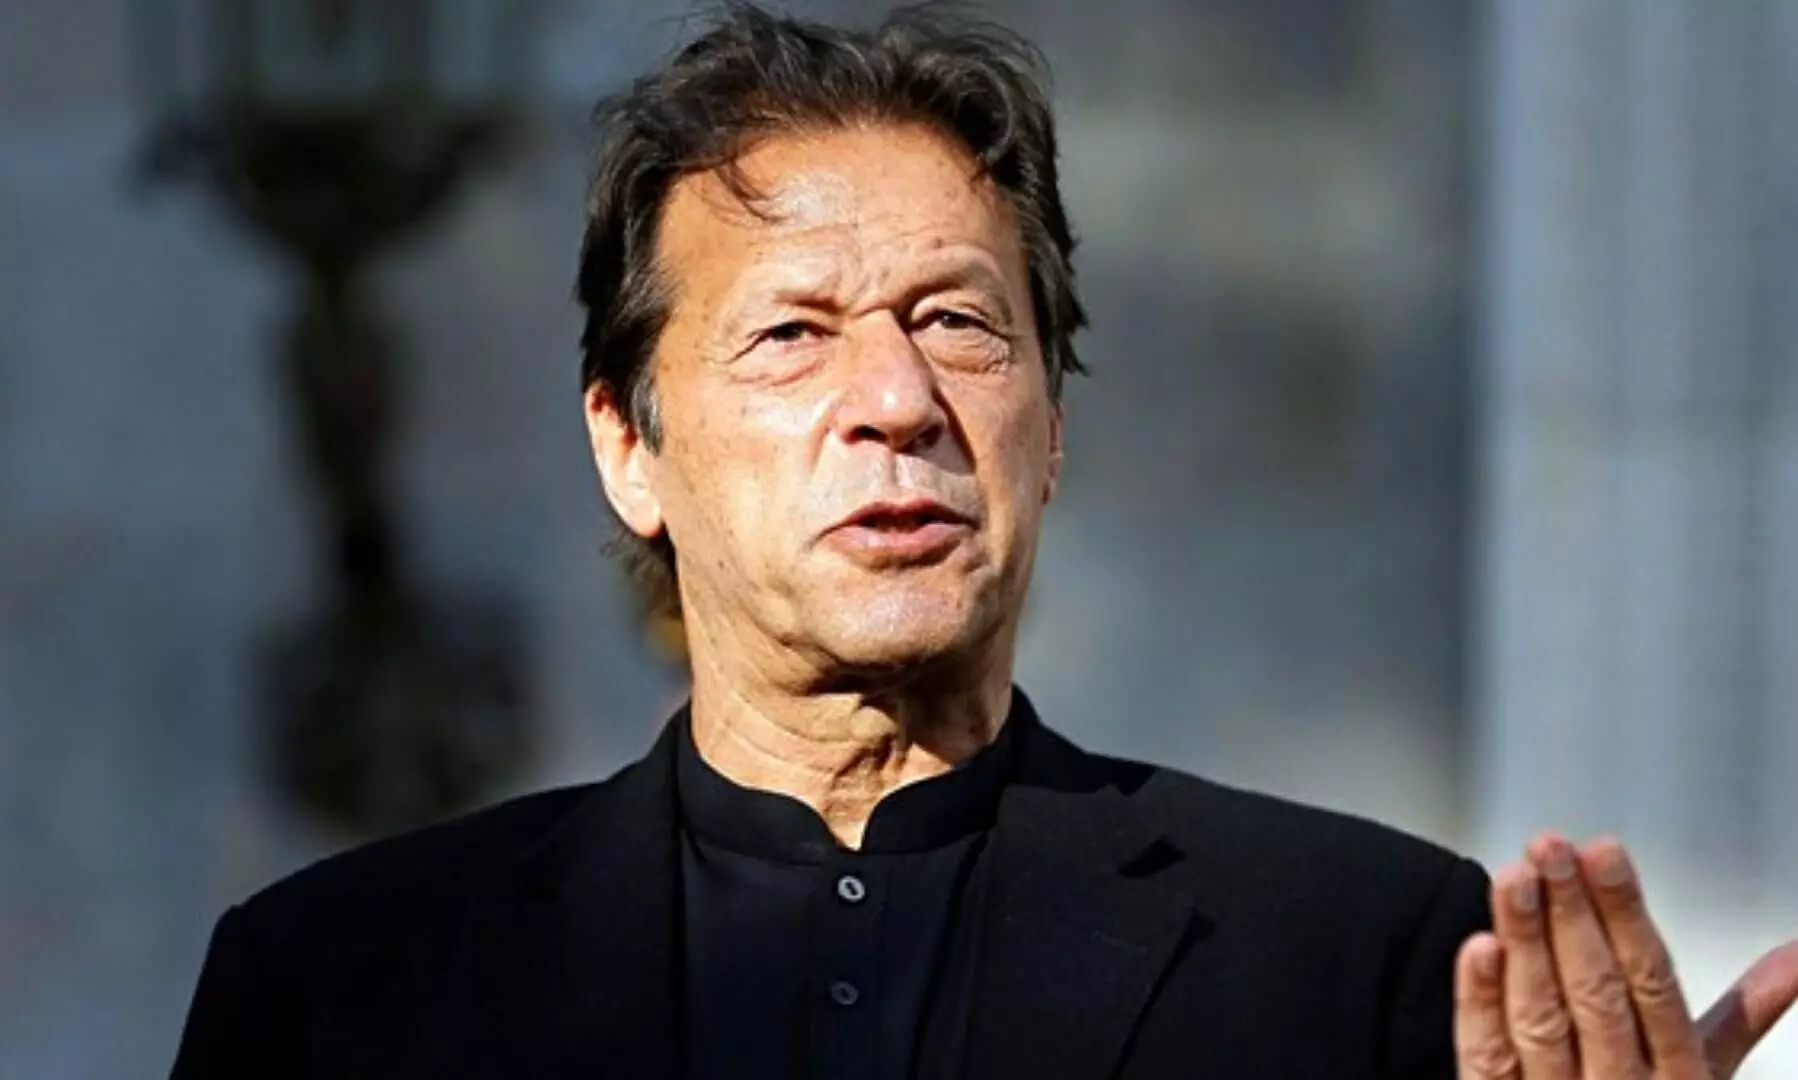 Attack on Pak prison housing Imran Khan foiled, 3 arrested